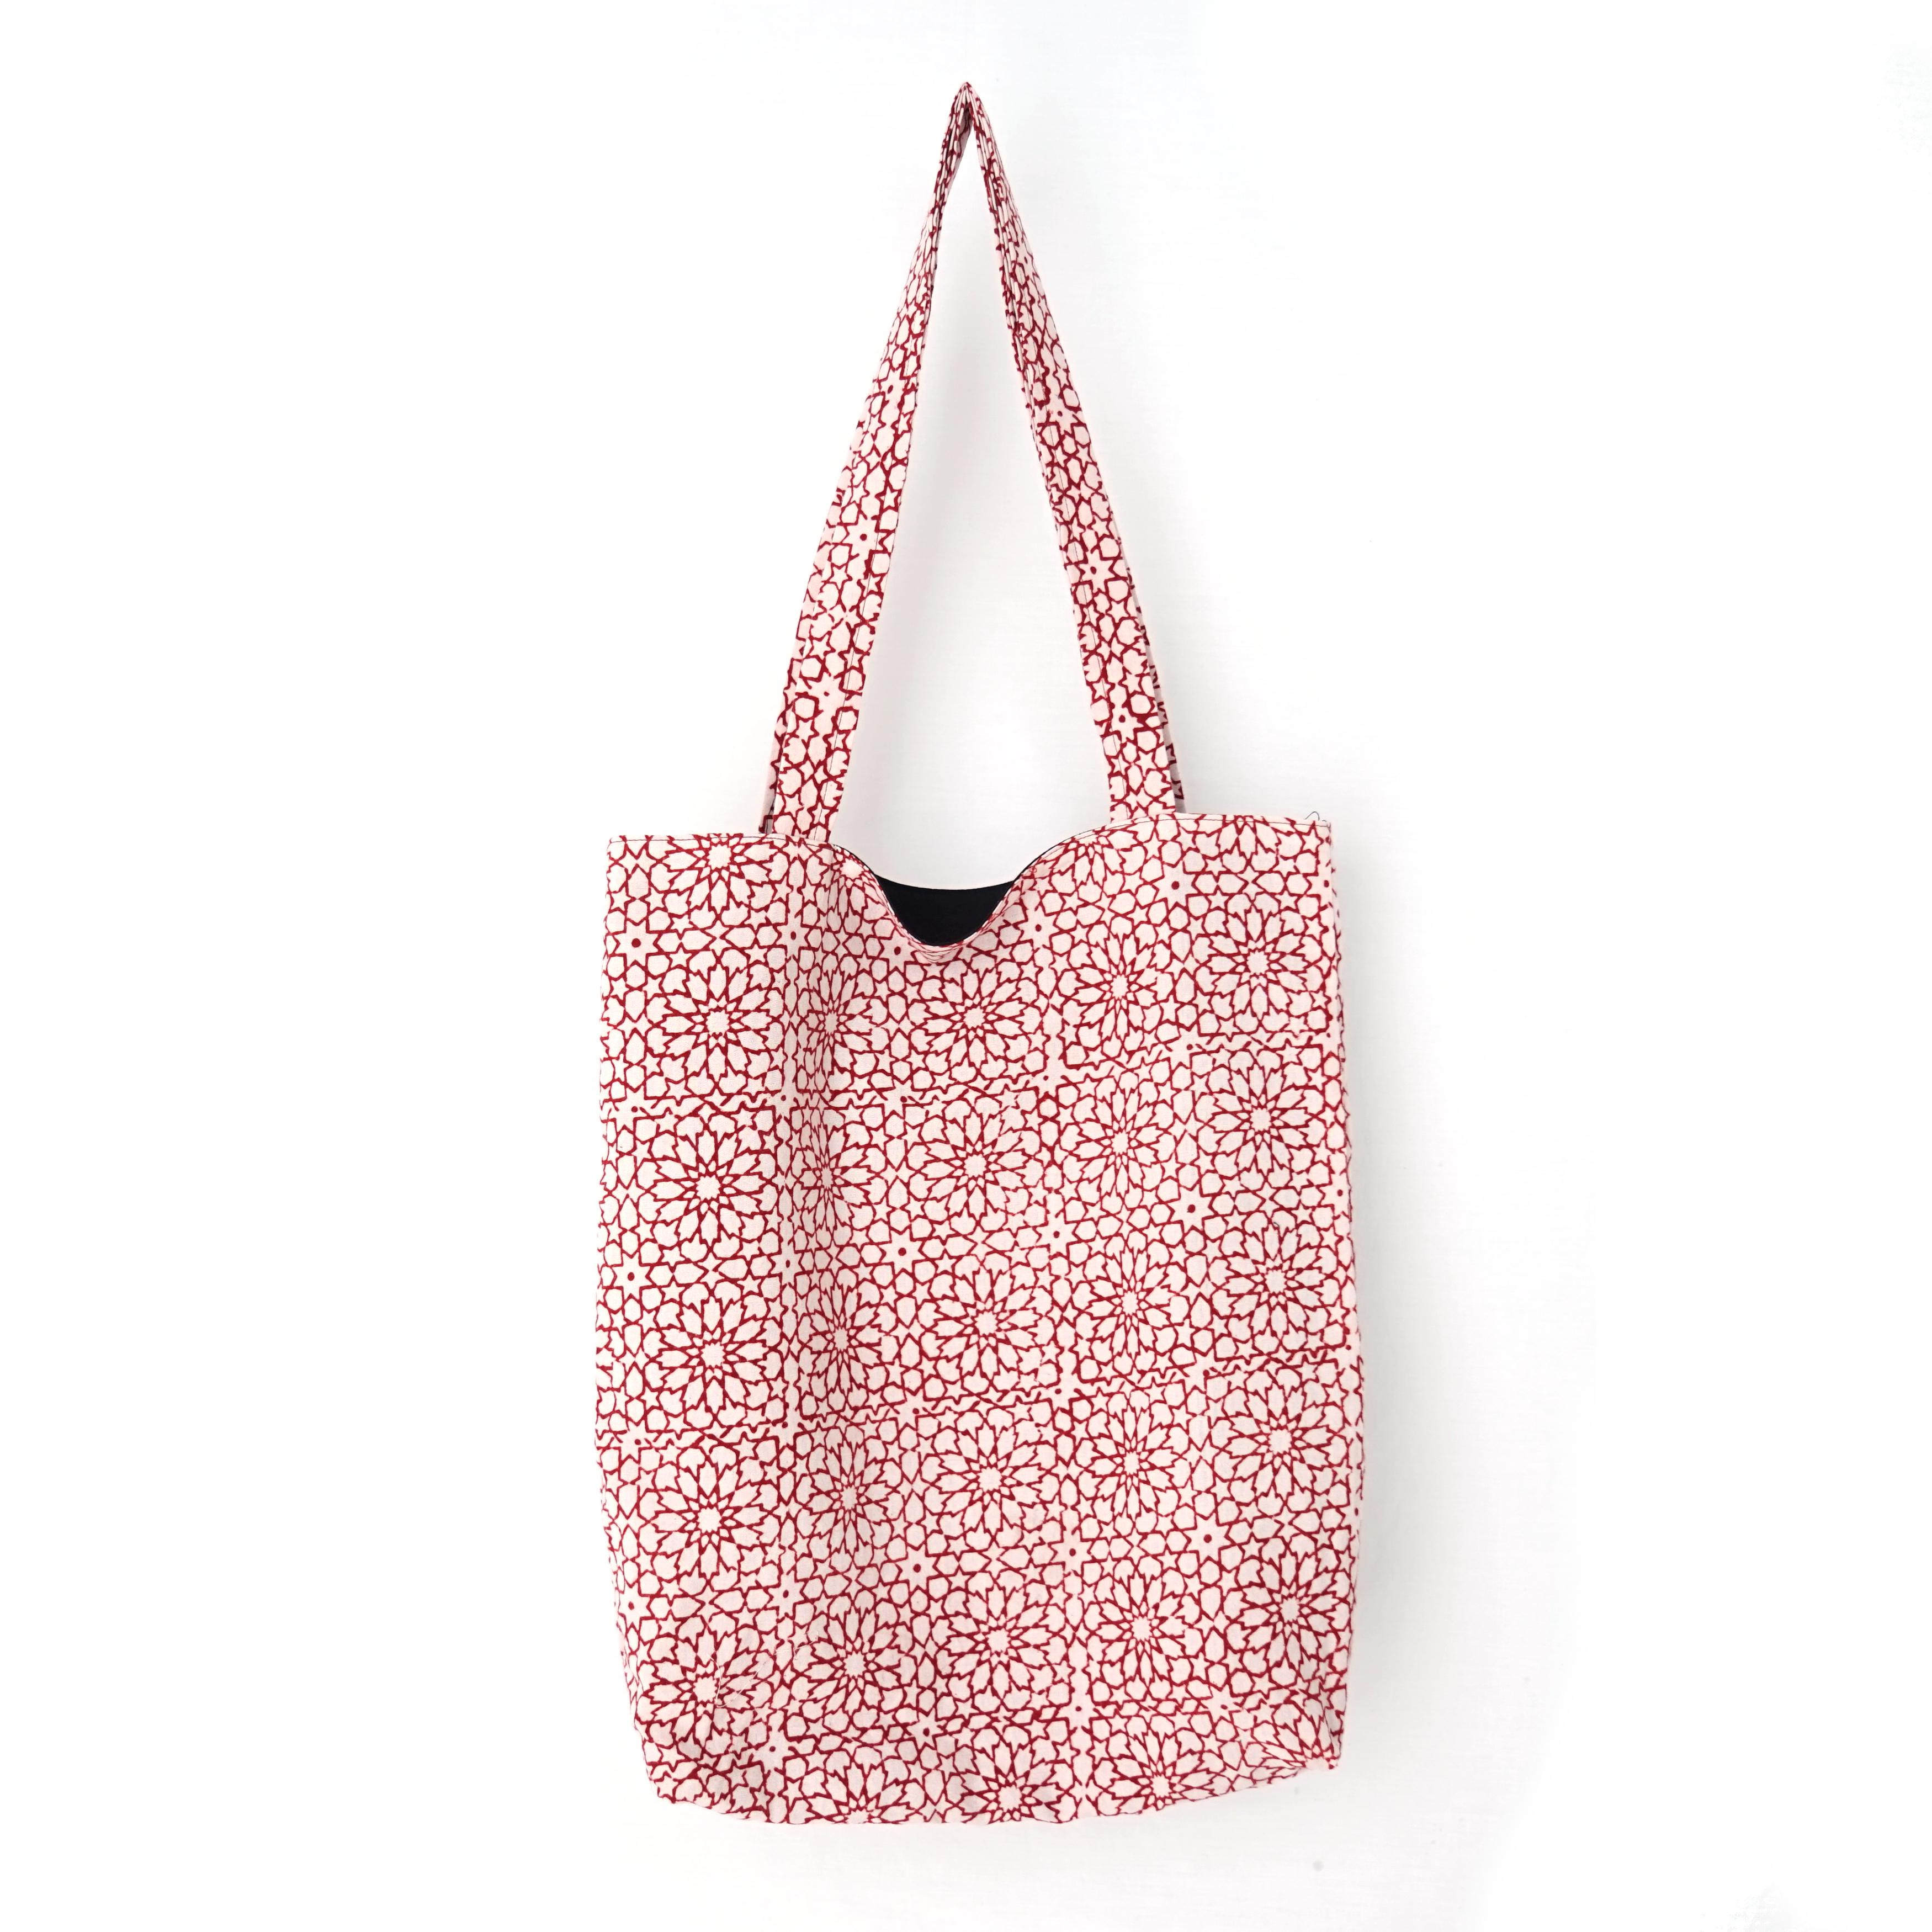 1 - TB014 - Block-Printed Tote Bag - Red Floral Print - Open